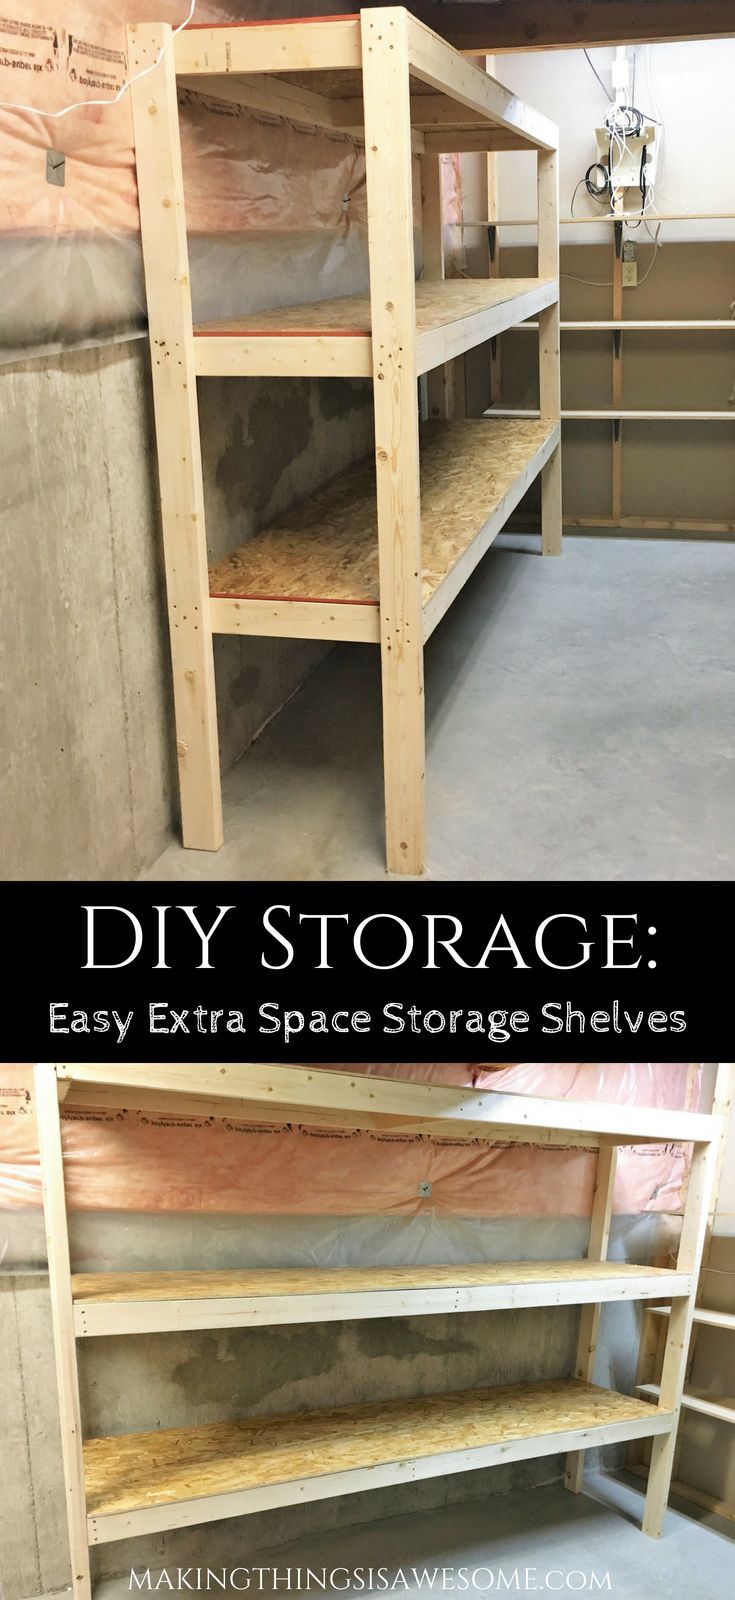 DIY Storage: Easy Extra Space Storage Shelves - Making Things is Awesome - DIY Storage: Easy Extra Space Storage Shelves - Making Things is Awesome -   19 diy Shelves easy ideas